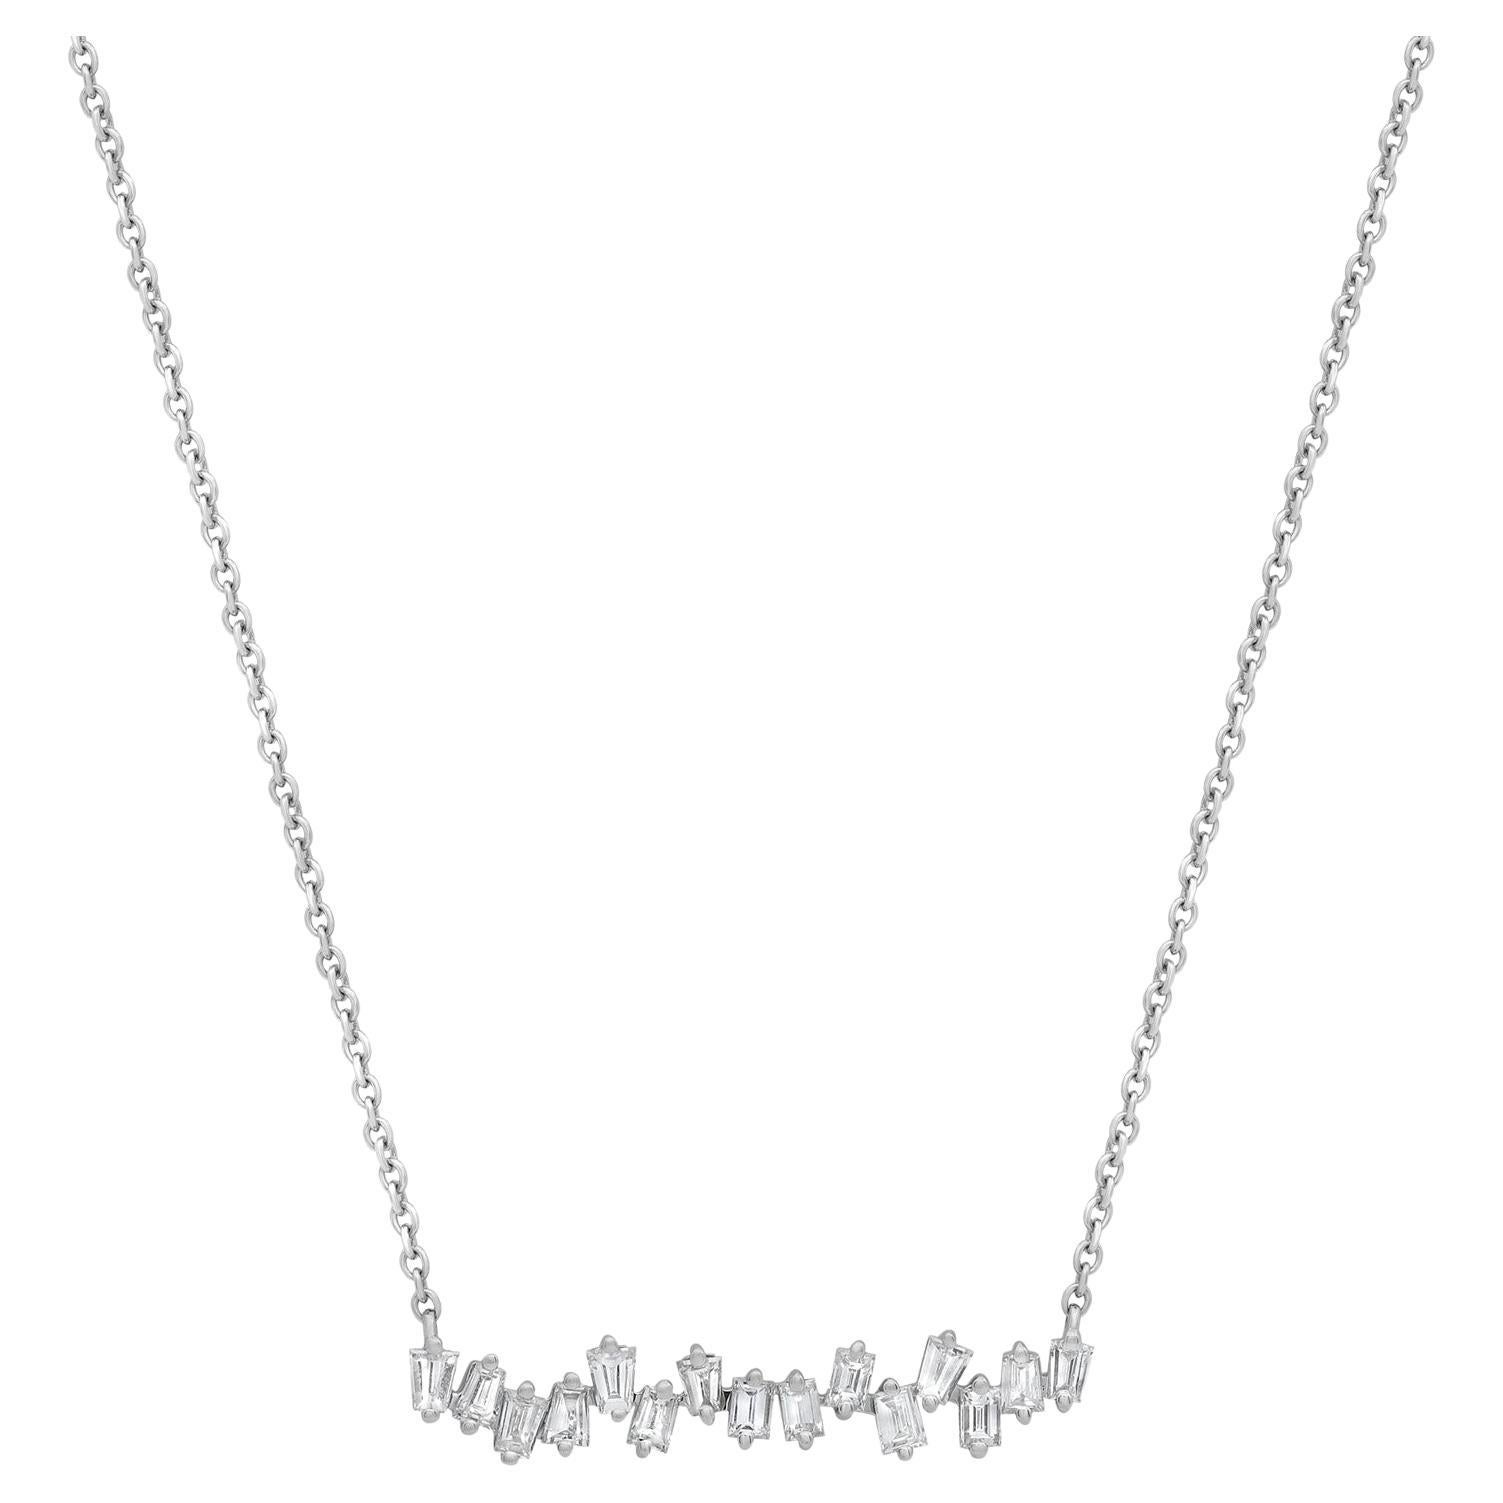 Rachel Koen 1.00Cttw Baguette Cut Diamond Cluster Bar Necklace 18K White Gold